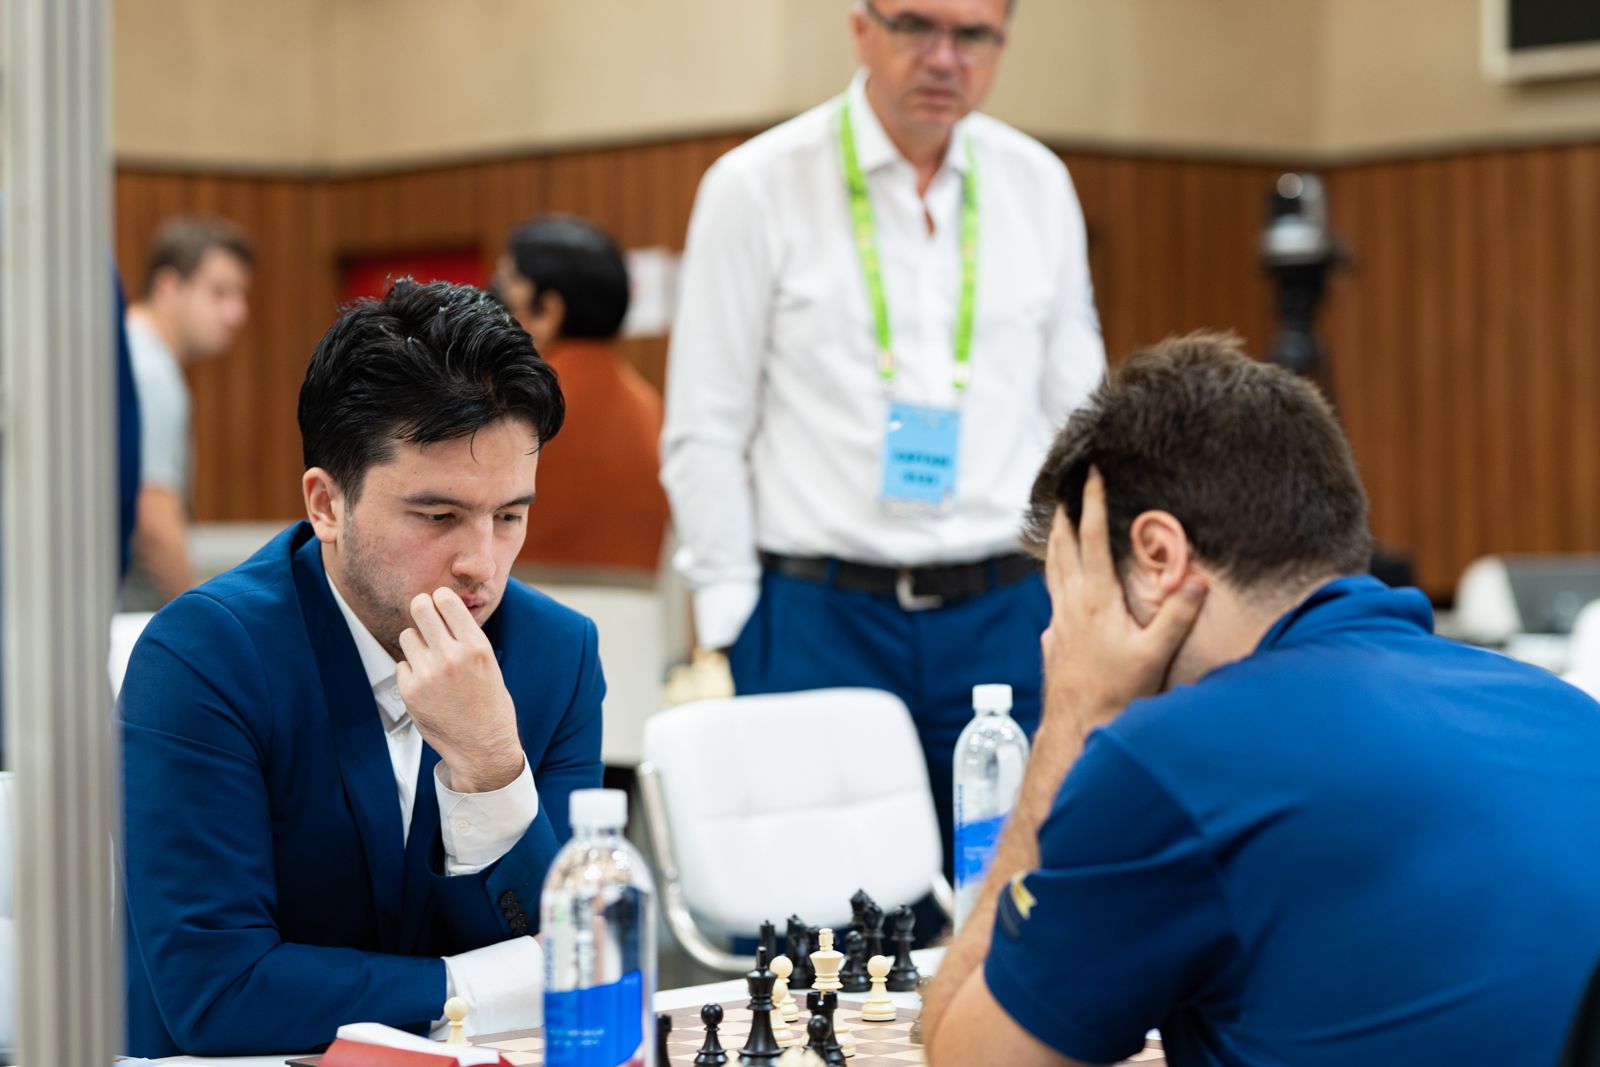 🏆 14ª Olimpíada de Xadrez 🇷🇺 - Chess.com - Português